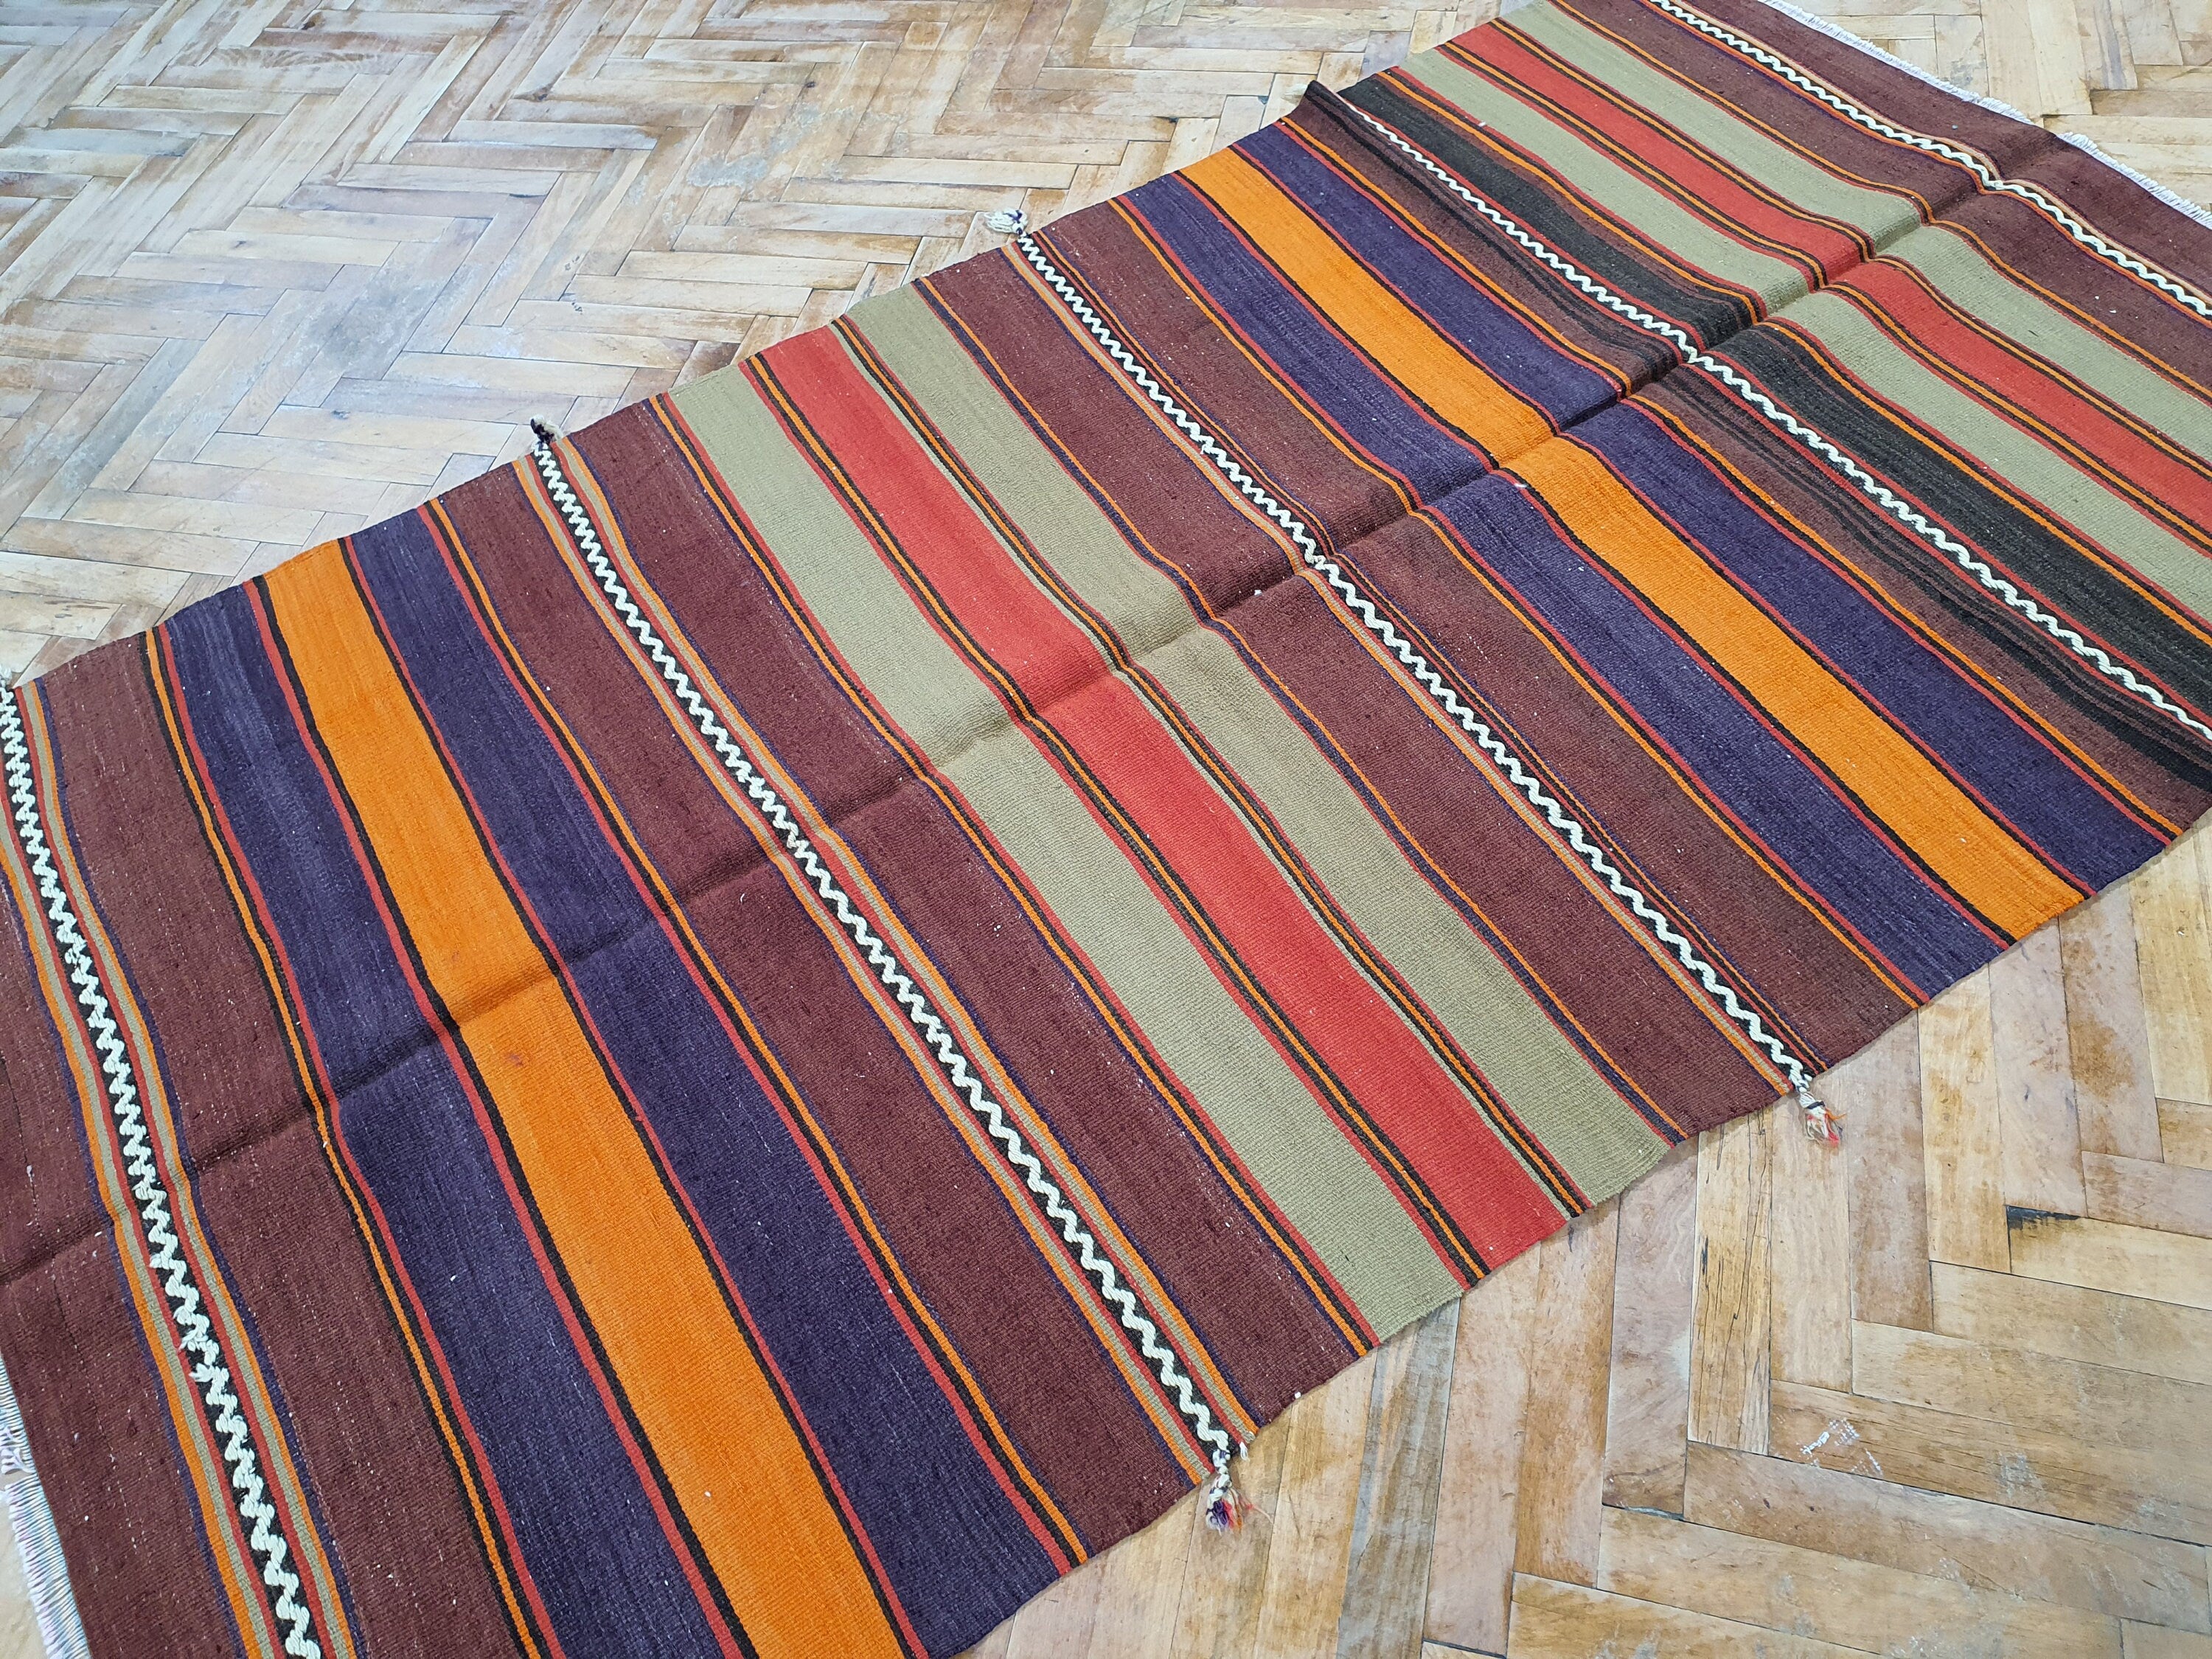 Turkish Kilim Rug, Handmade Organic Wool Rug, Anatolian Tribal Nomadic Moroccan Bohemian Living Room Rustic Decor Persian Area Rug 7'3"x4'4'